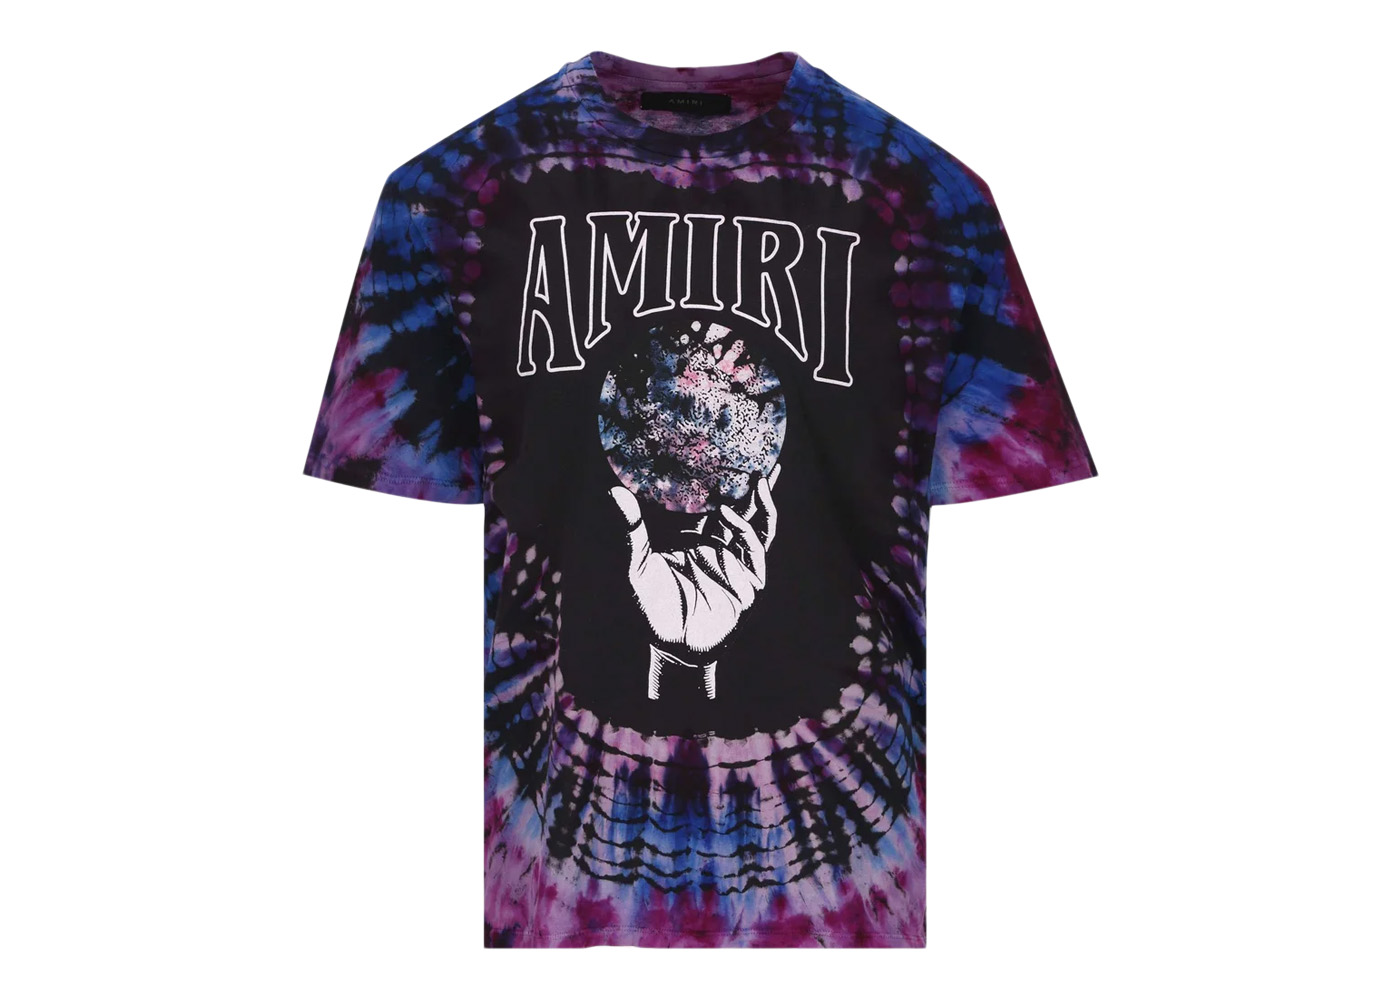 AMIRI Crystal Ball Tie-Dye Short Sleeve T-shirt Black/Purple/Blue